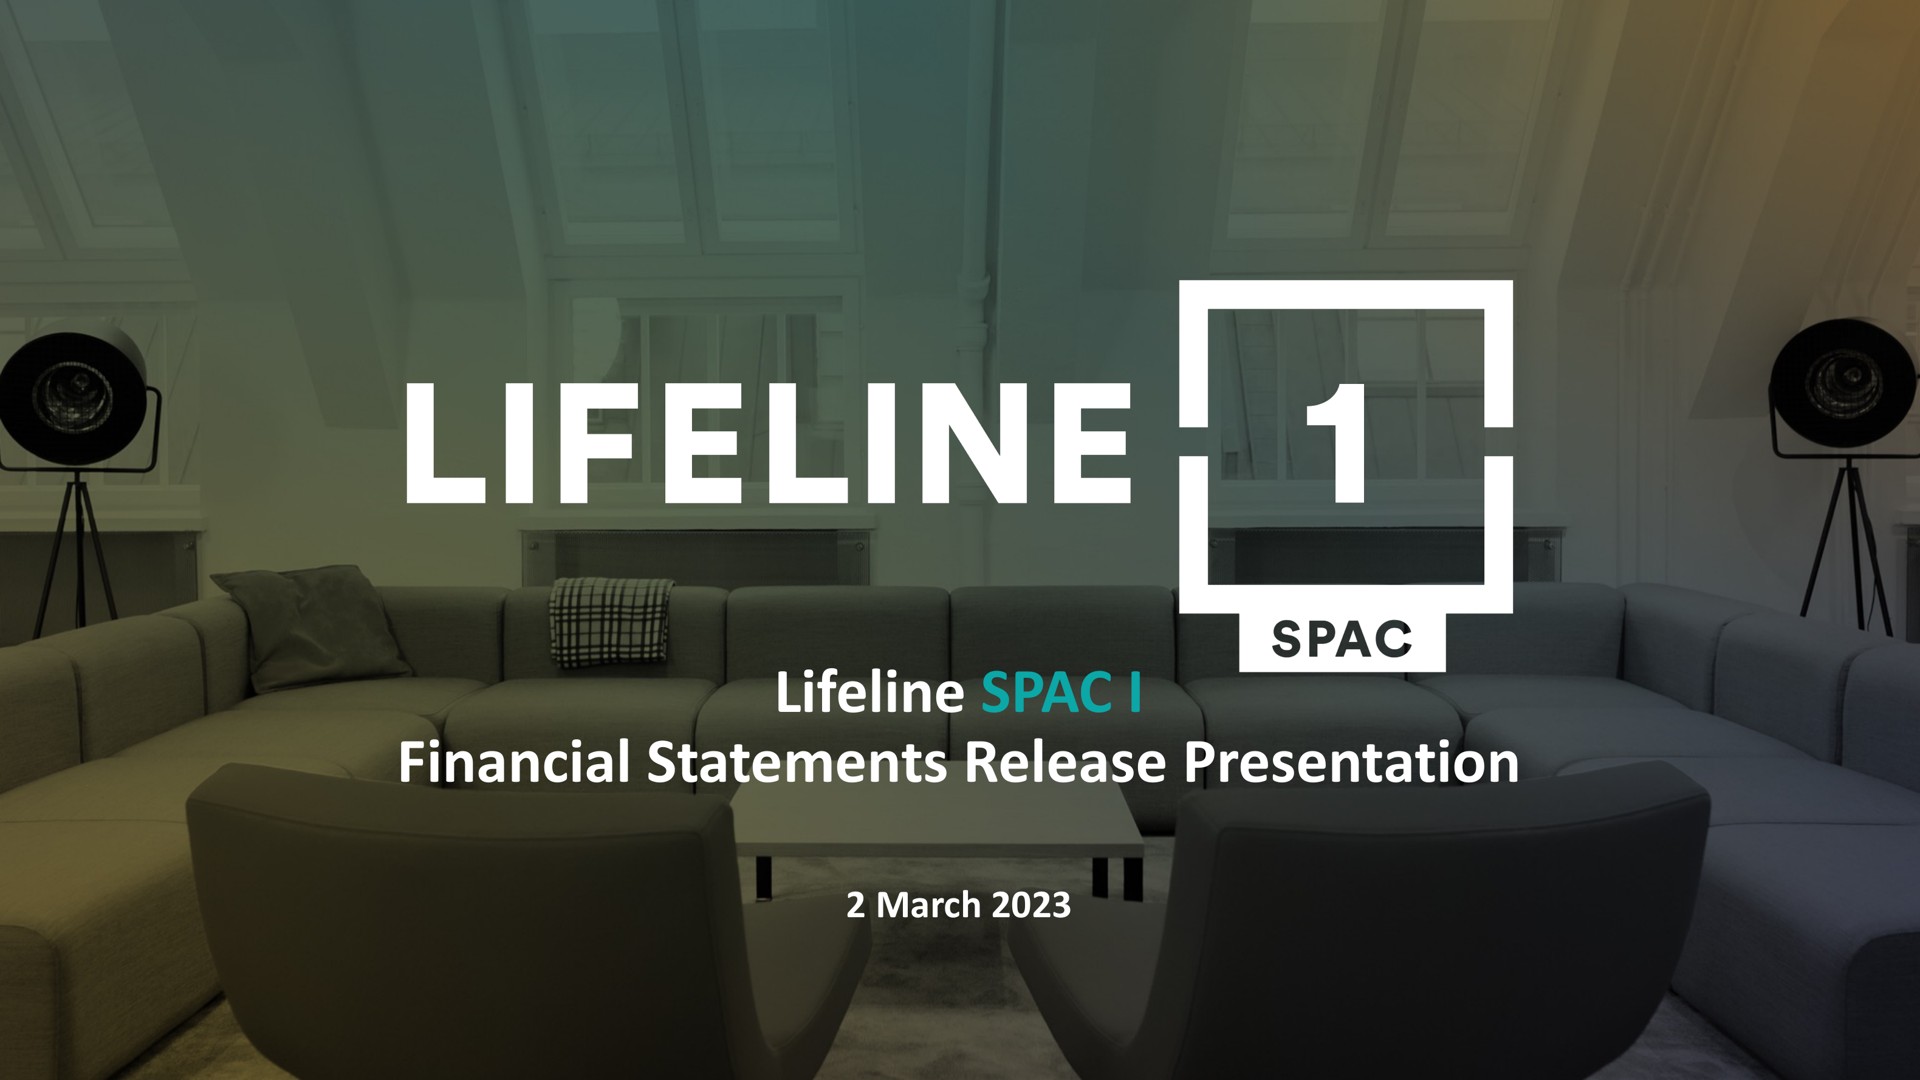 lifeline i financial statements release presentation march wade | Lifeline SPAC 1